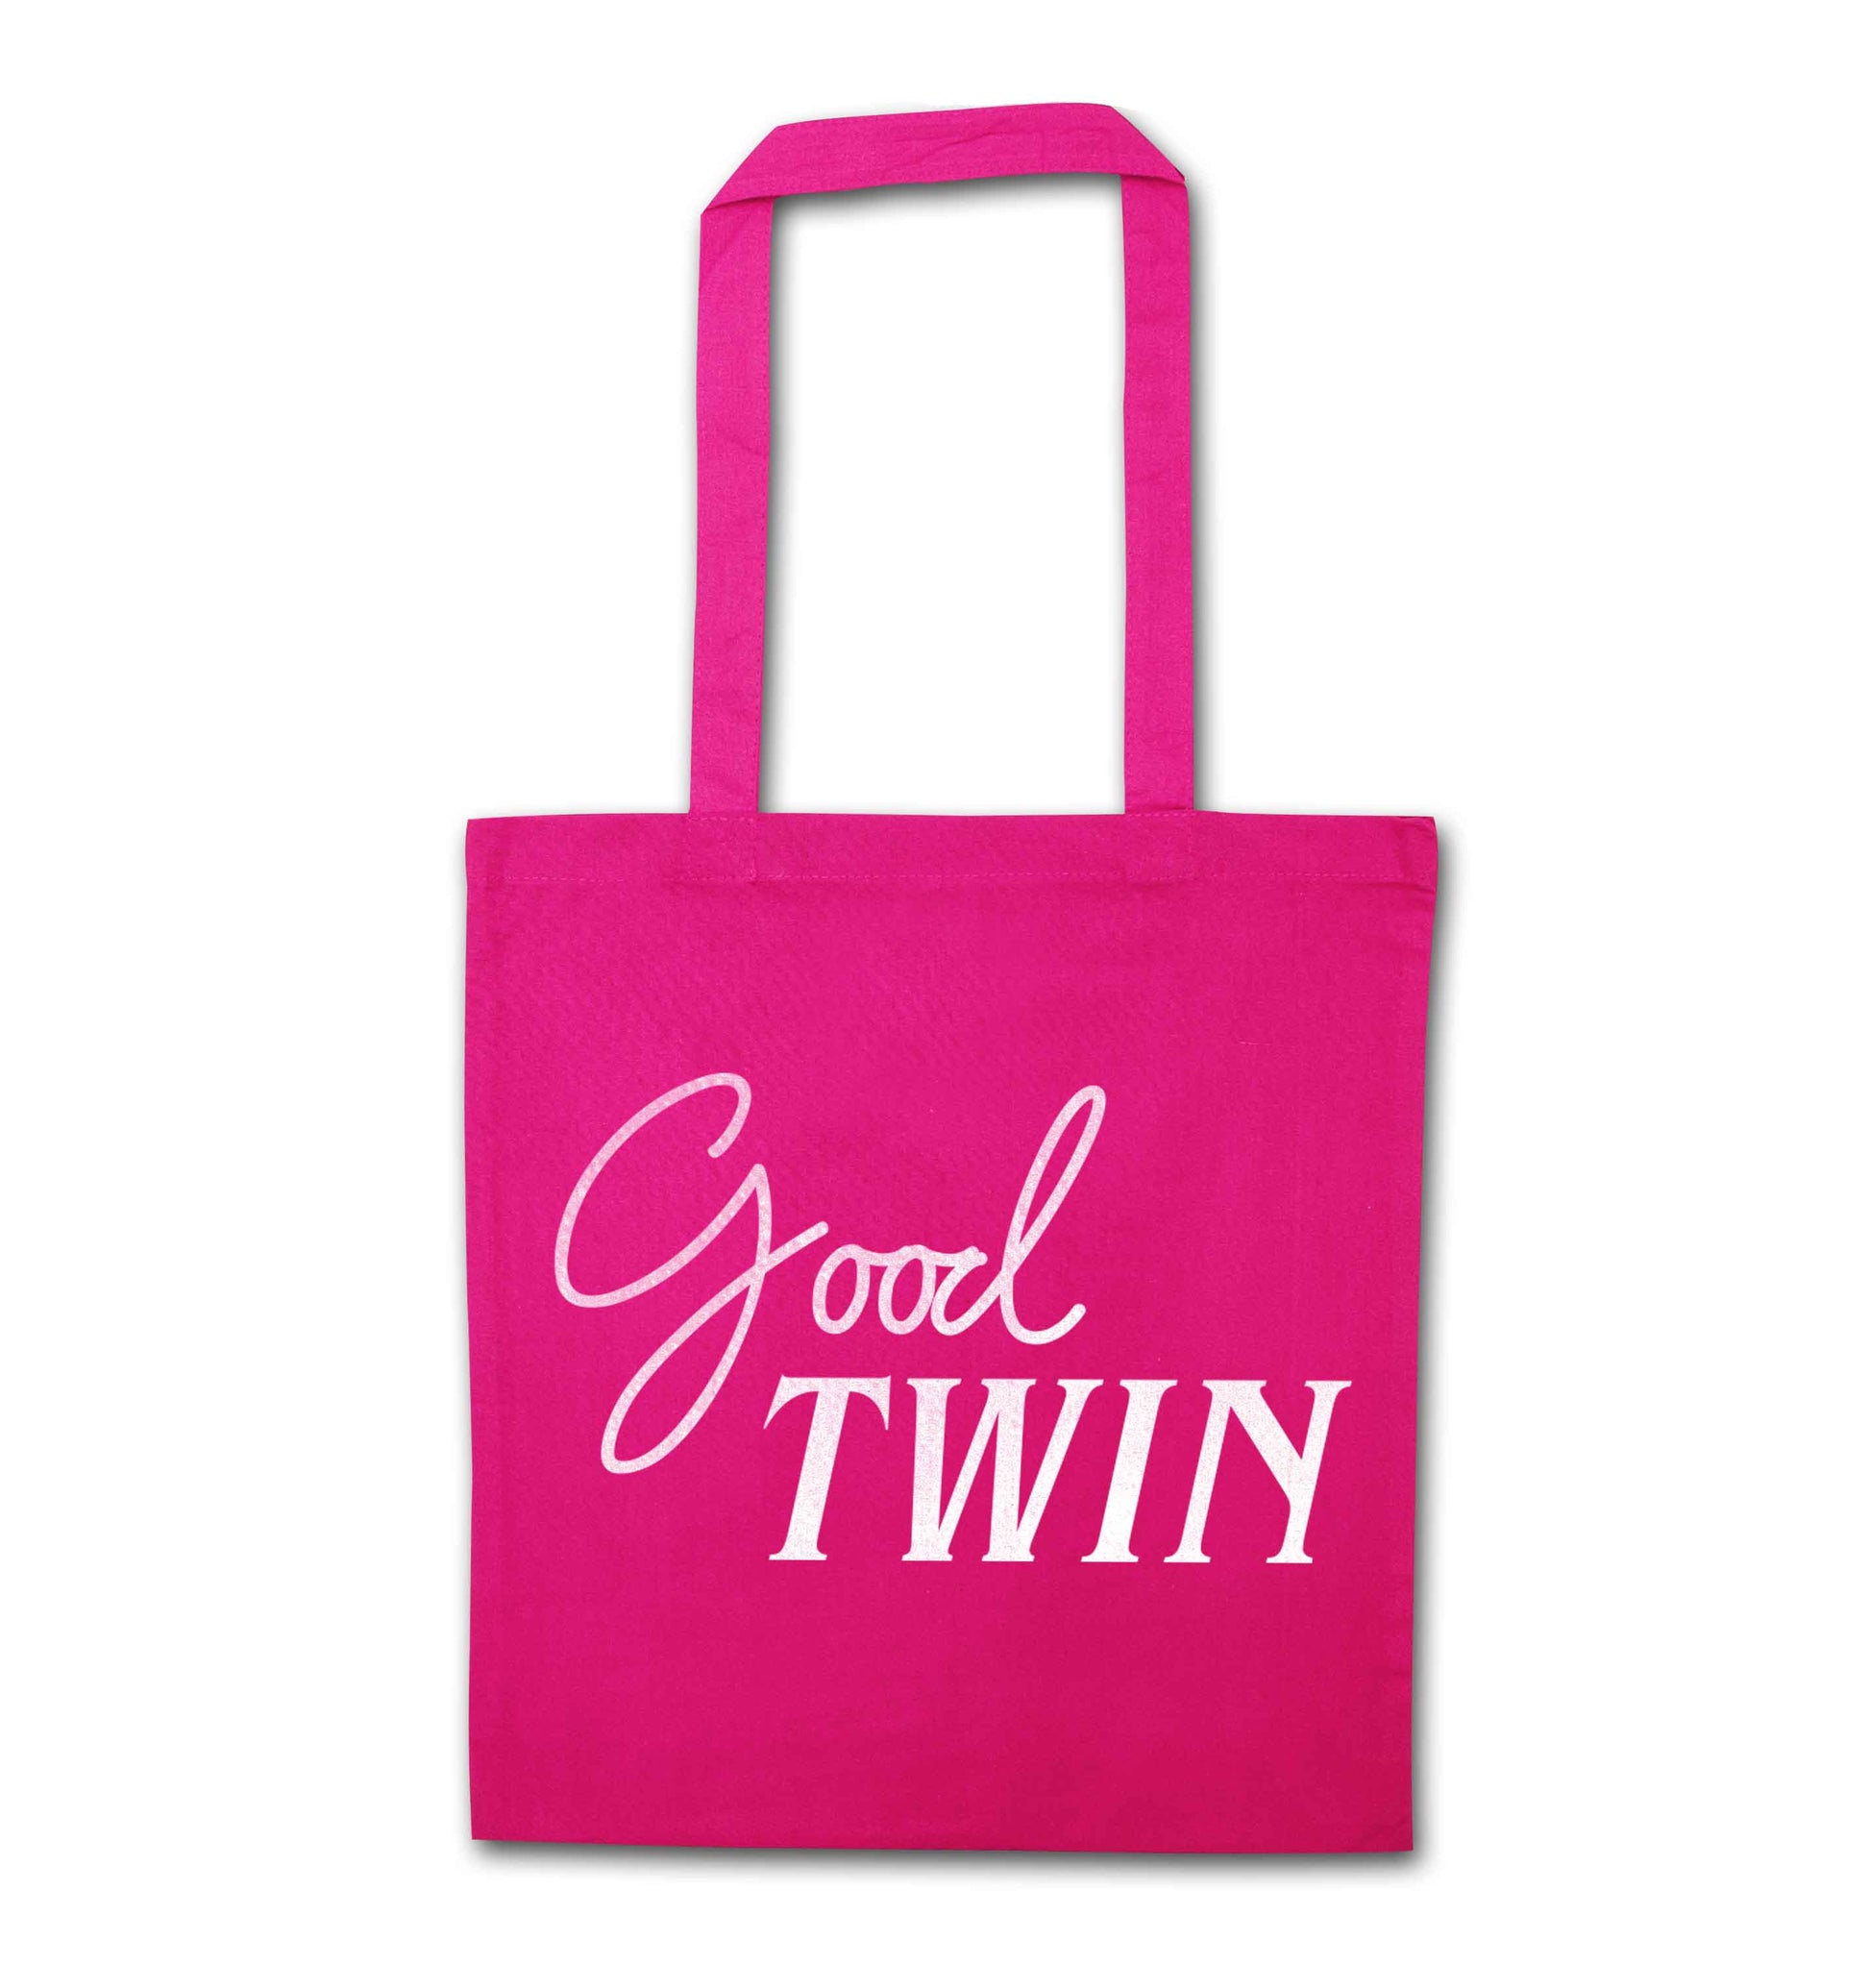 Good twin pink tote bag